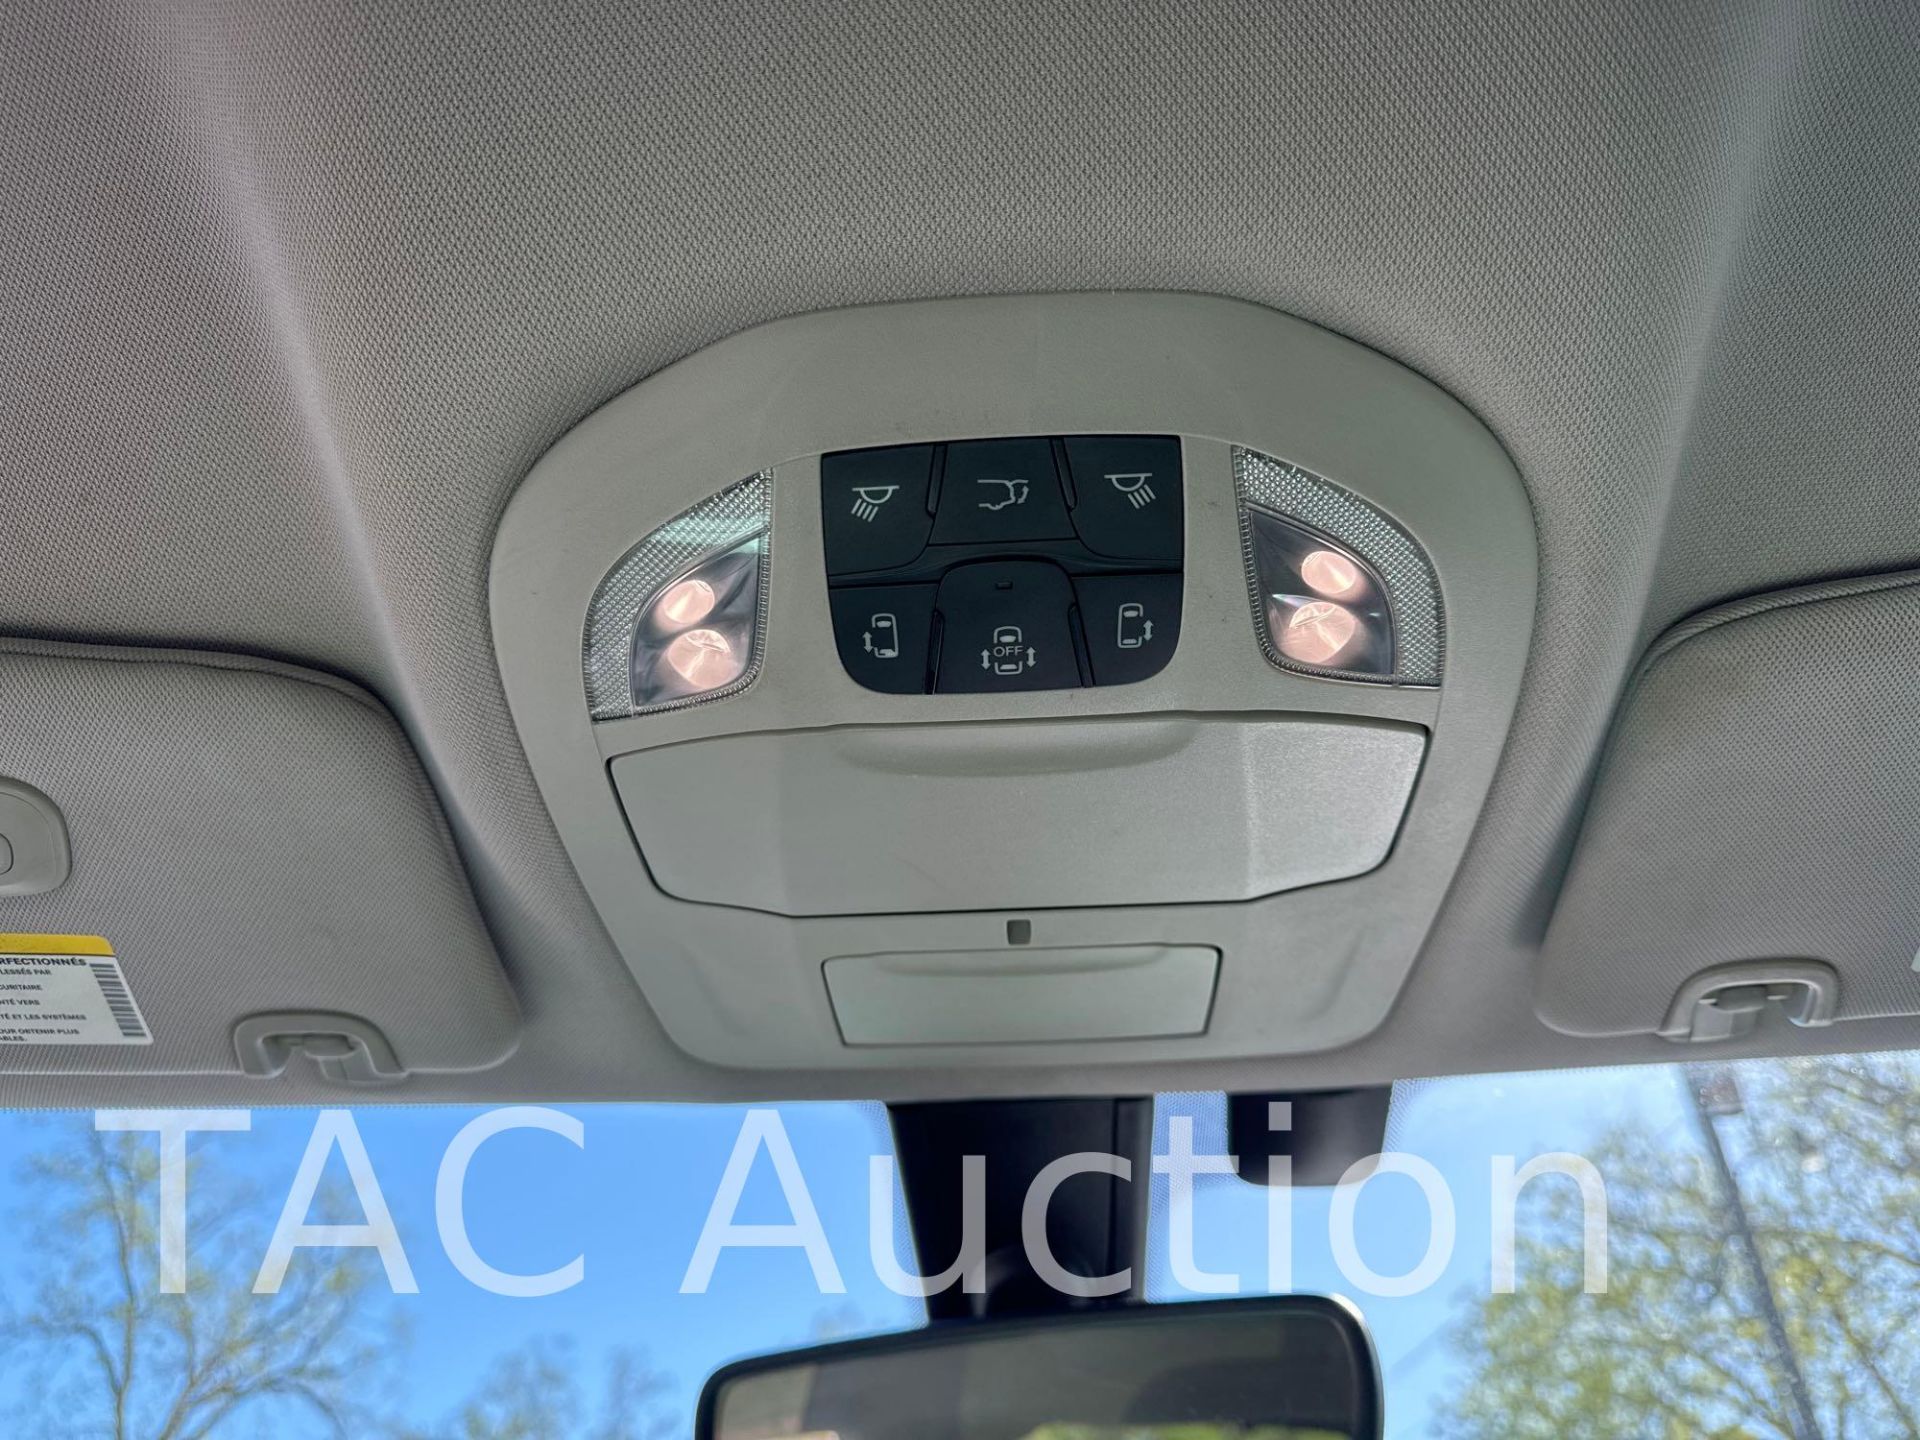 2018 Chrysler Pacifica Touring Plus Mini Van - Image 17 of 40